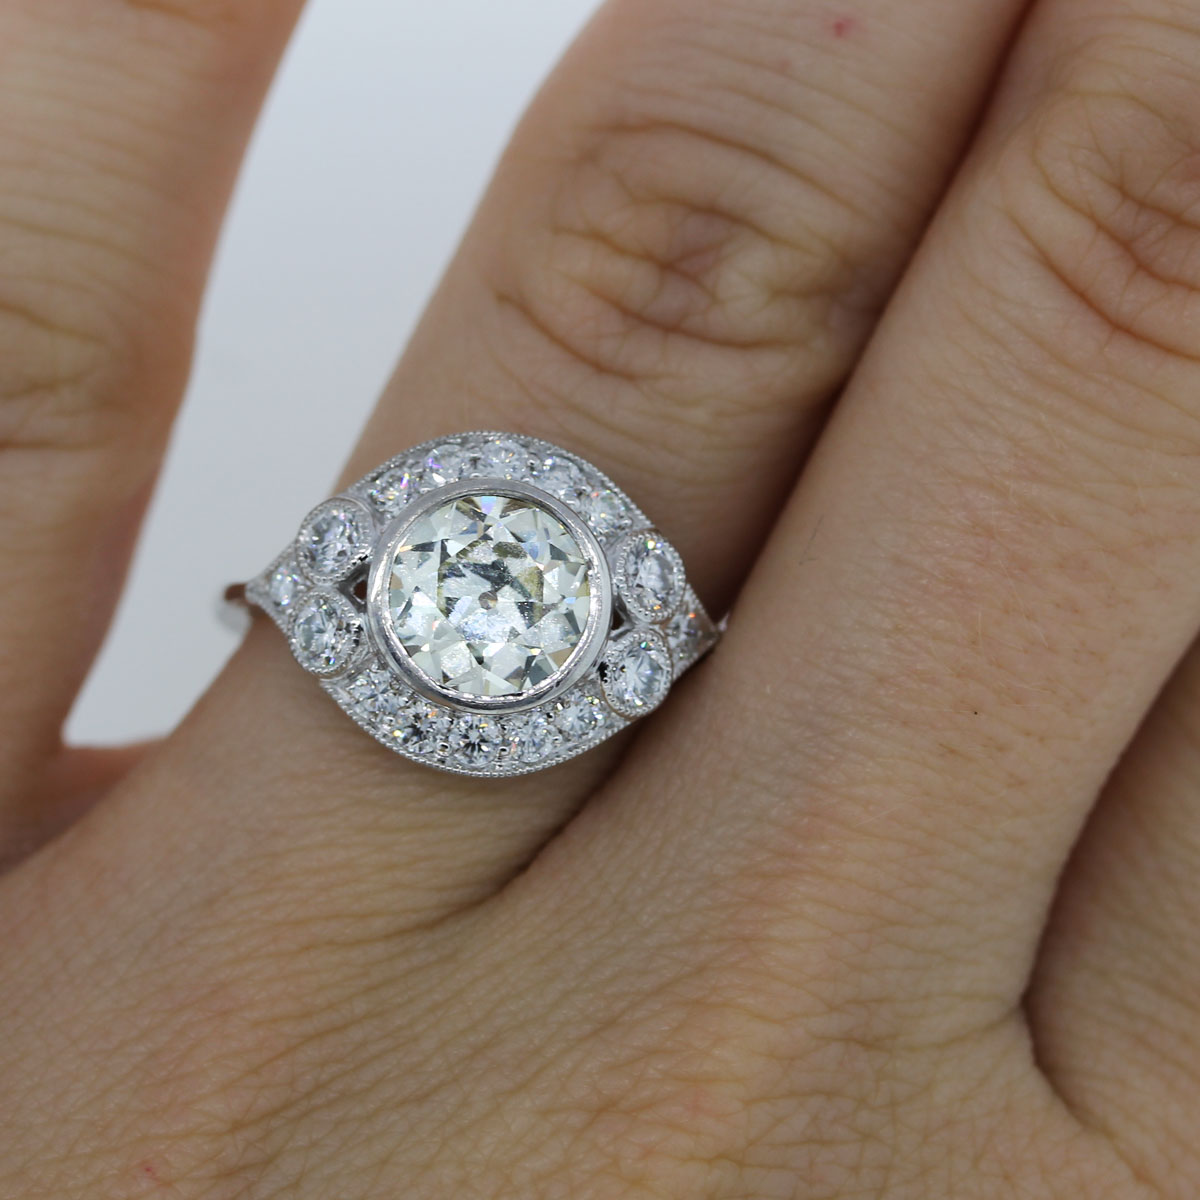  Vintage  Style  1 52ct Old European Cut Diamond Engagement Ring 